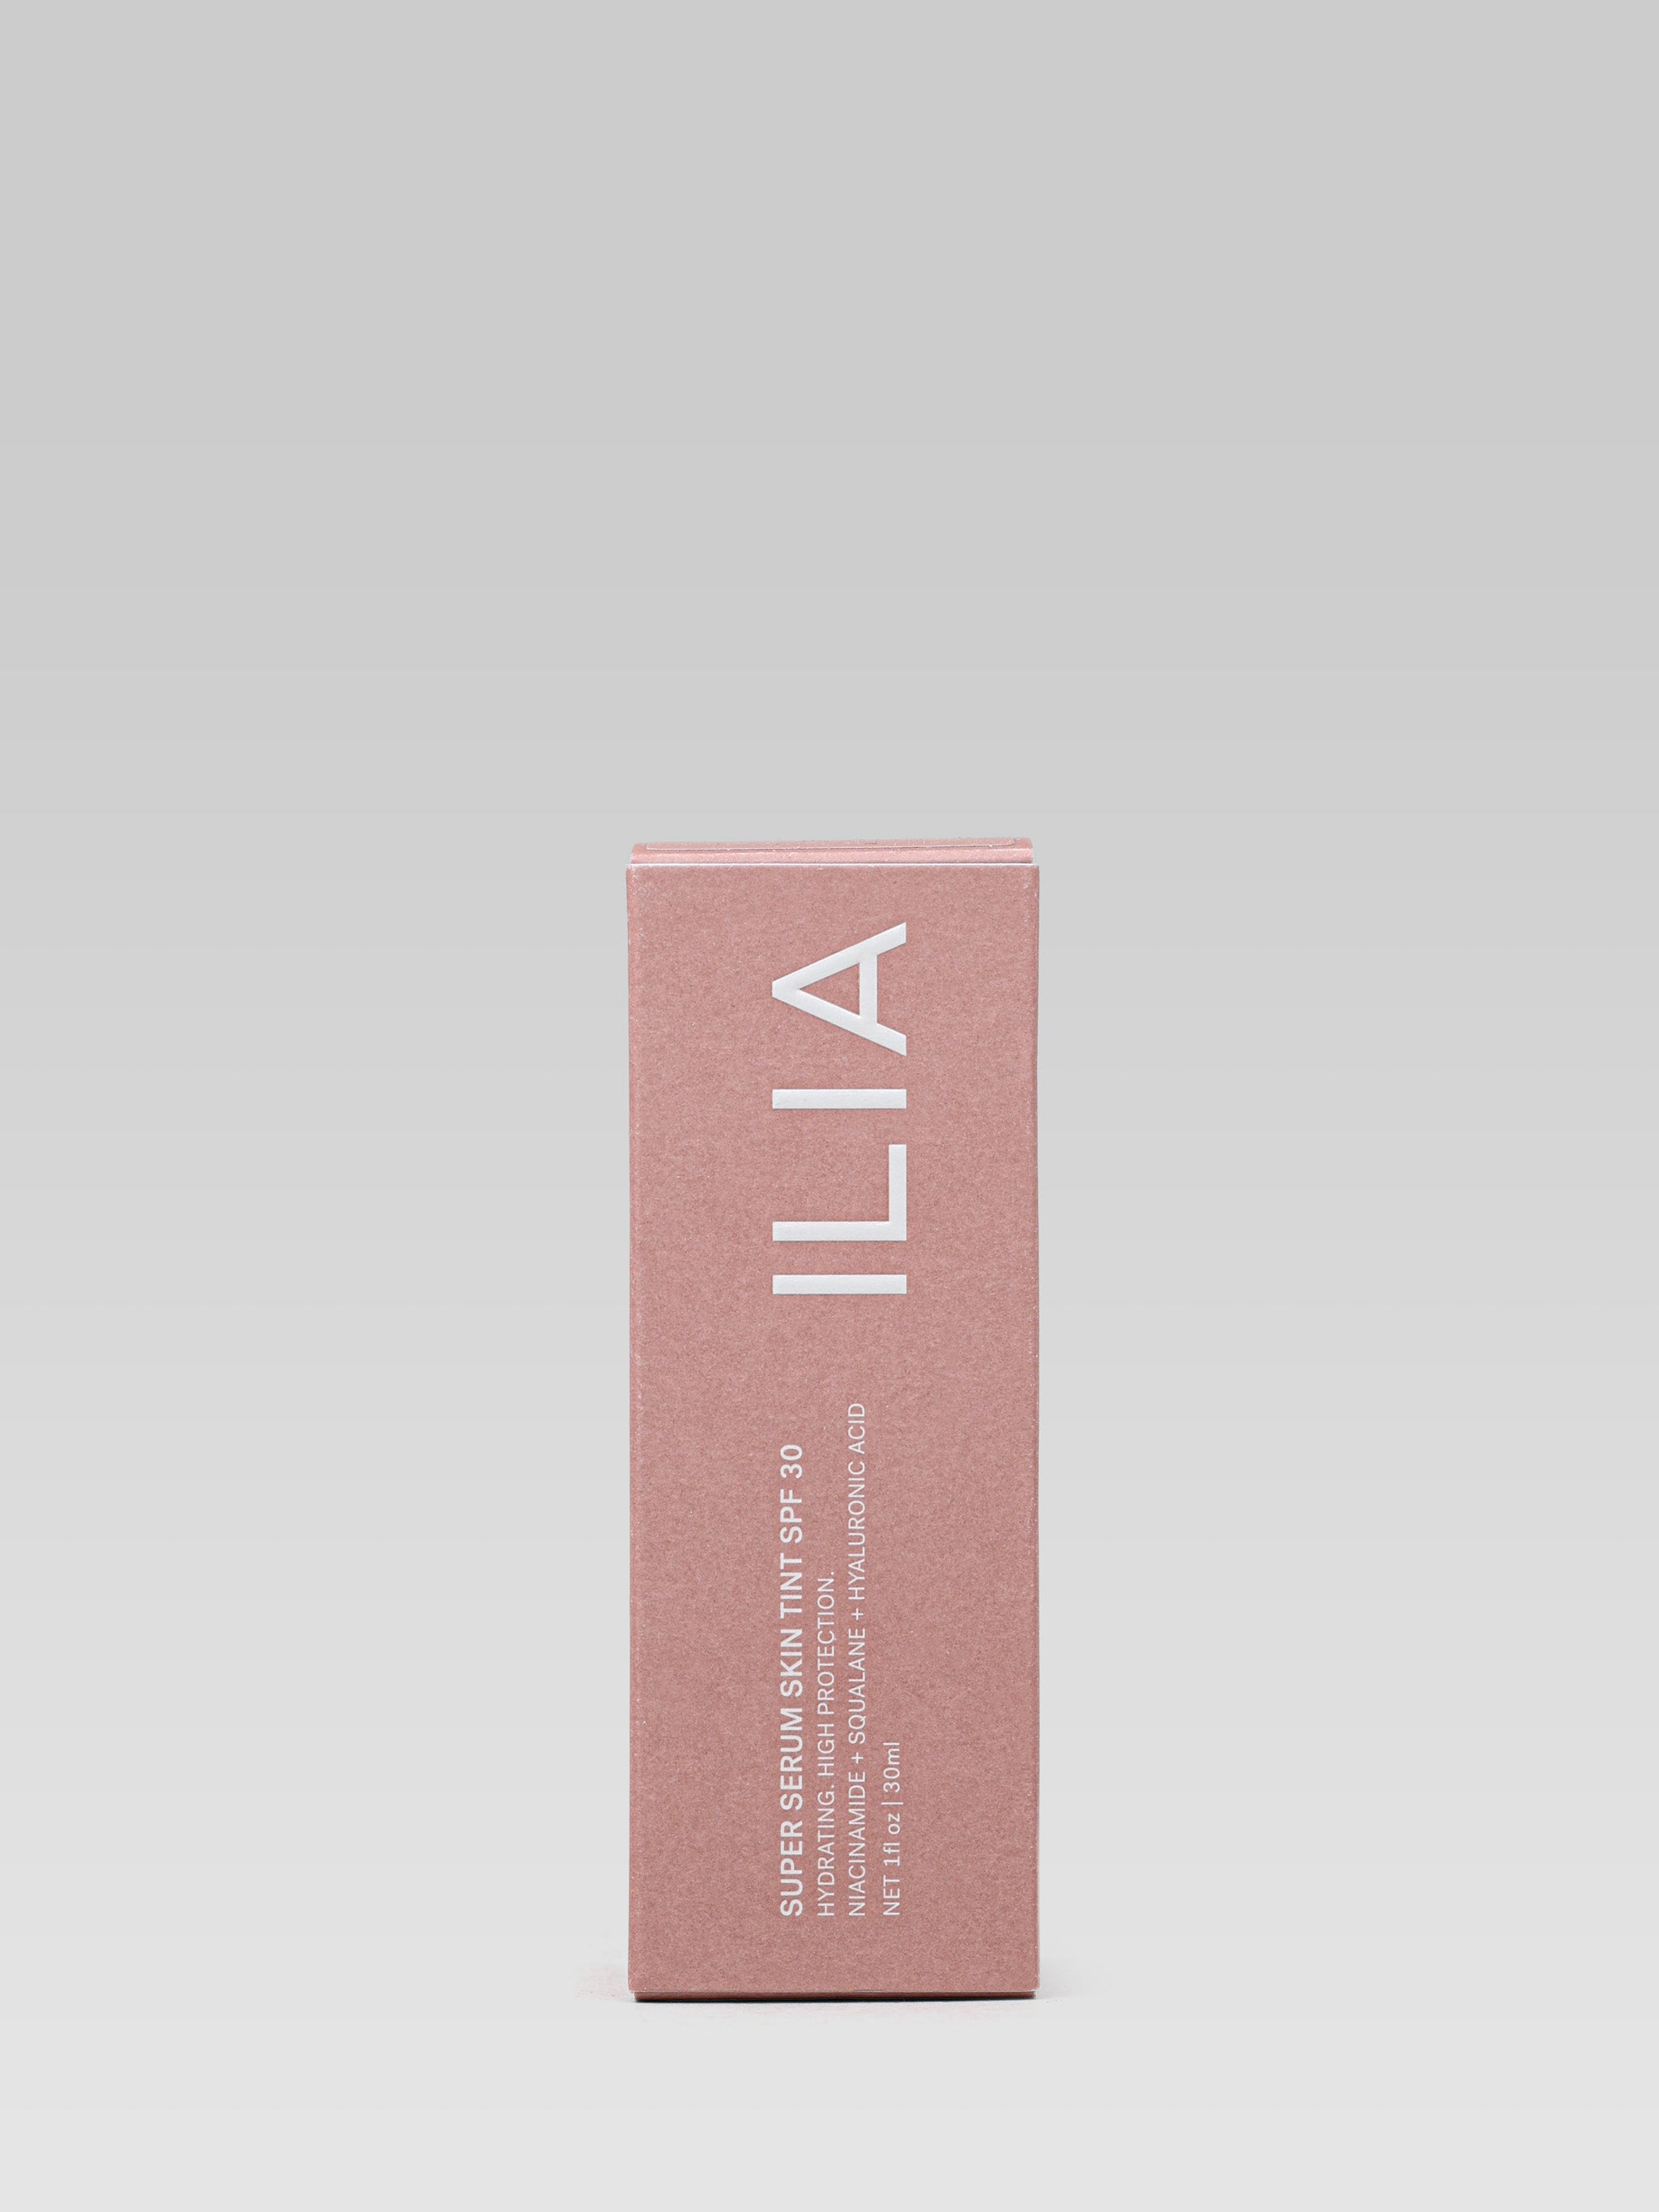 Ilia Beauty Super Serum Skin Tint SPF30 product packaging